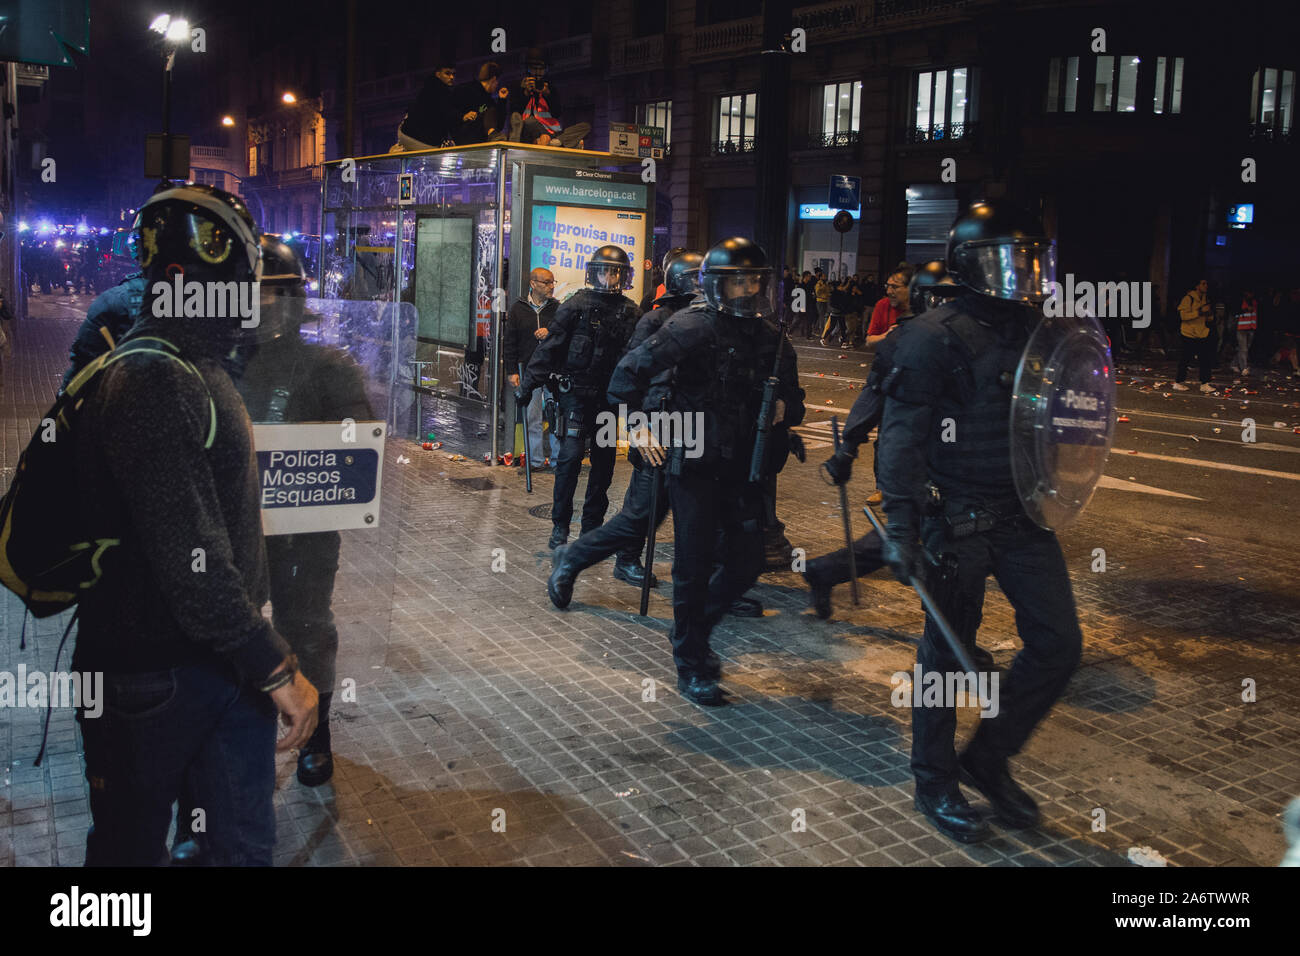 Police charges begin in Via Laietana, Barcelona, Spain. Stock Photo